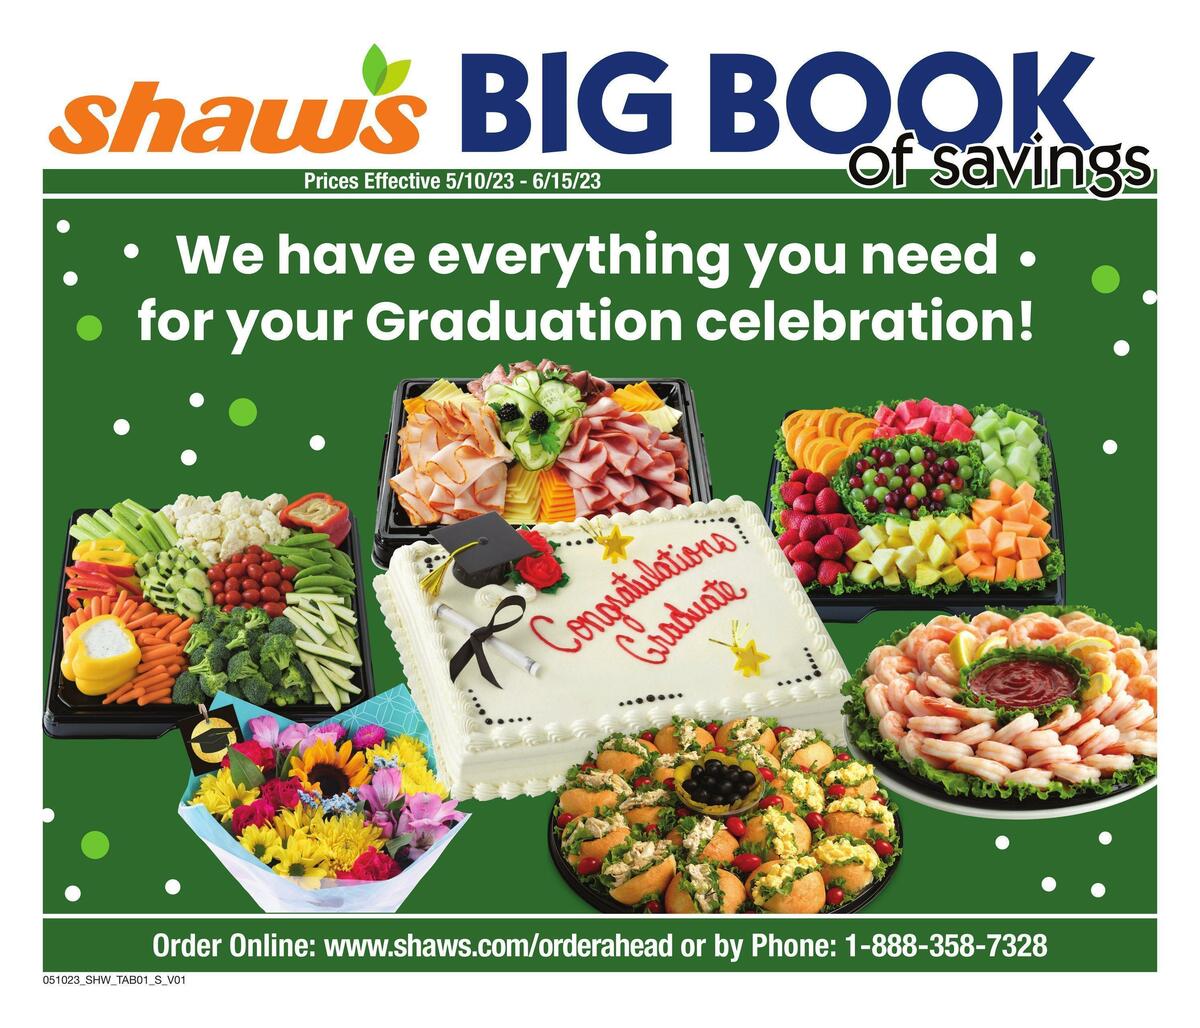 Shaw's Big Book of Savings Weekly Ad from May 10